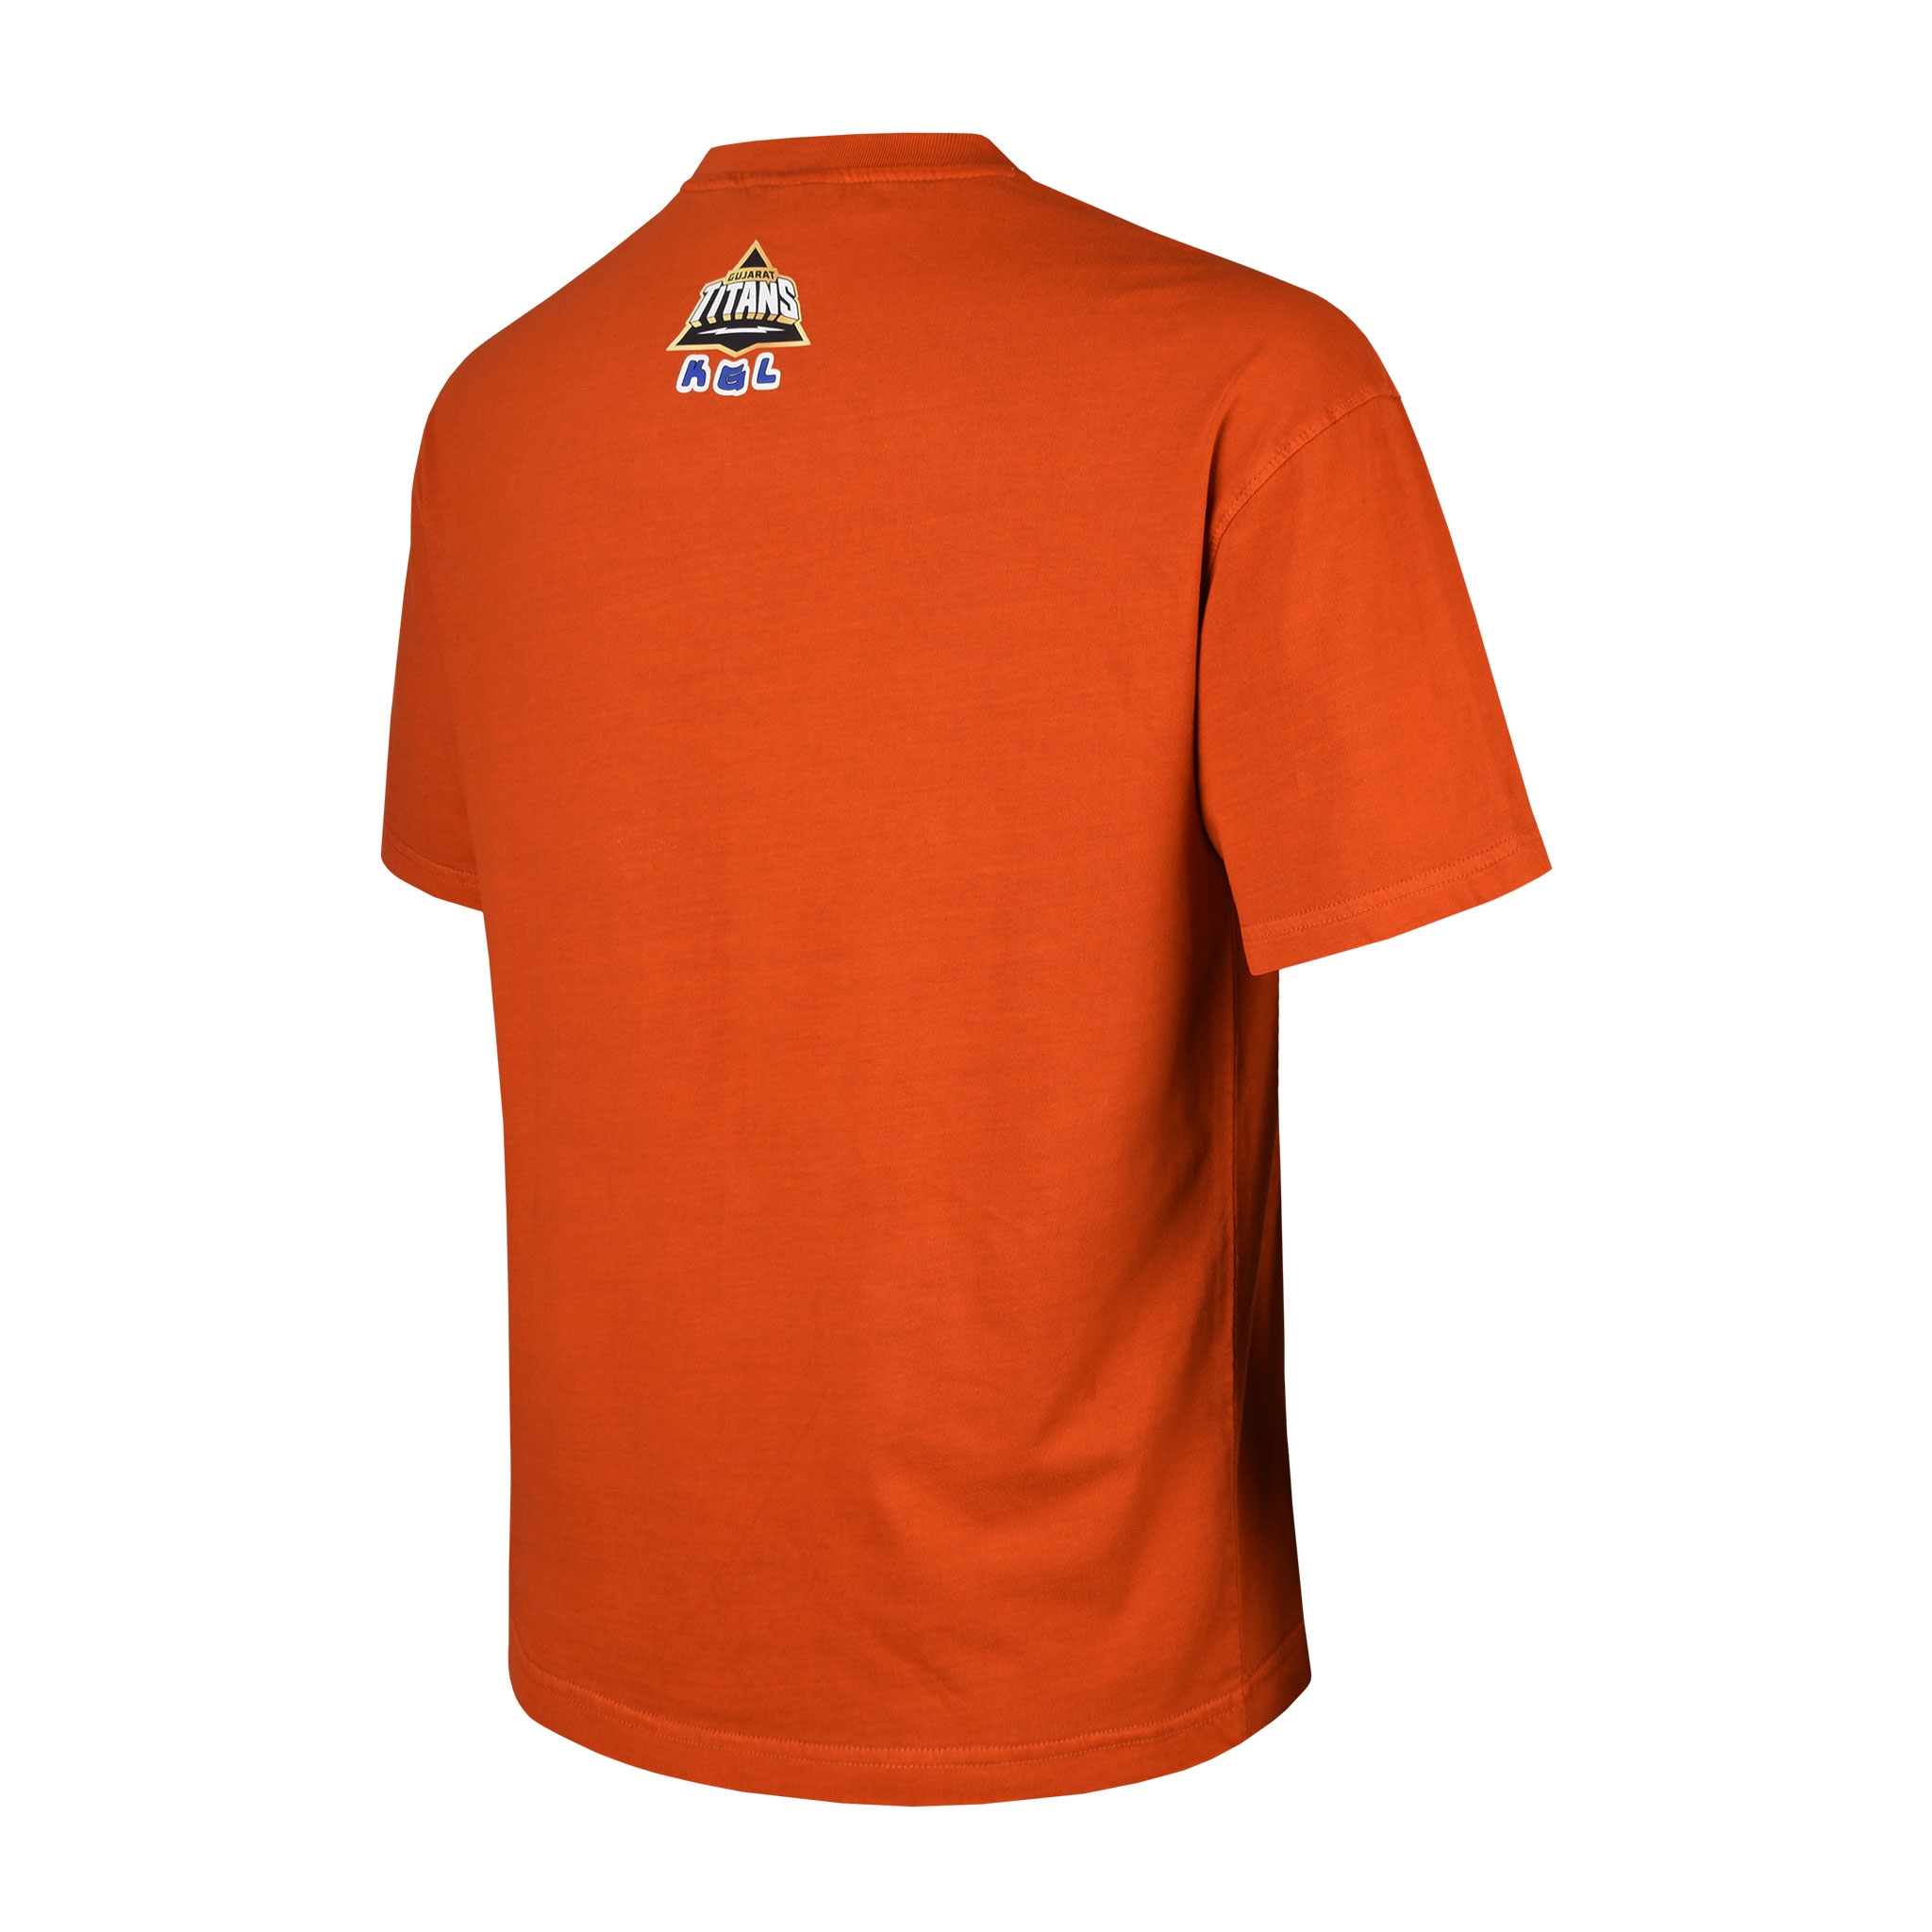 GTxKGL Existing Loudly Burnt Orange T-Shirt